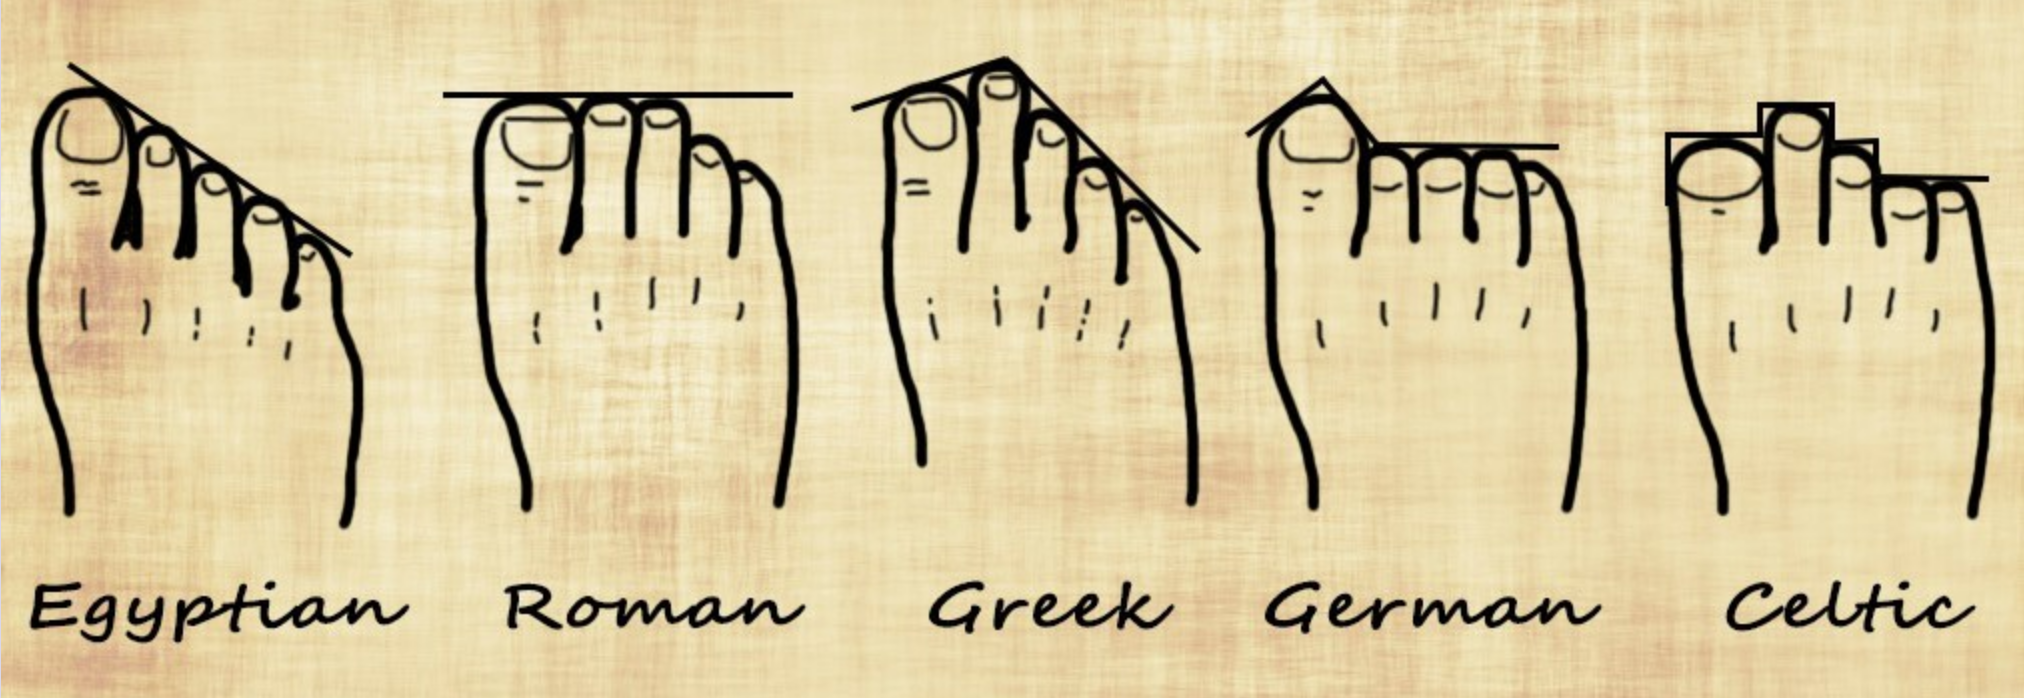 Foot Shape Ancestry